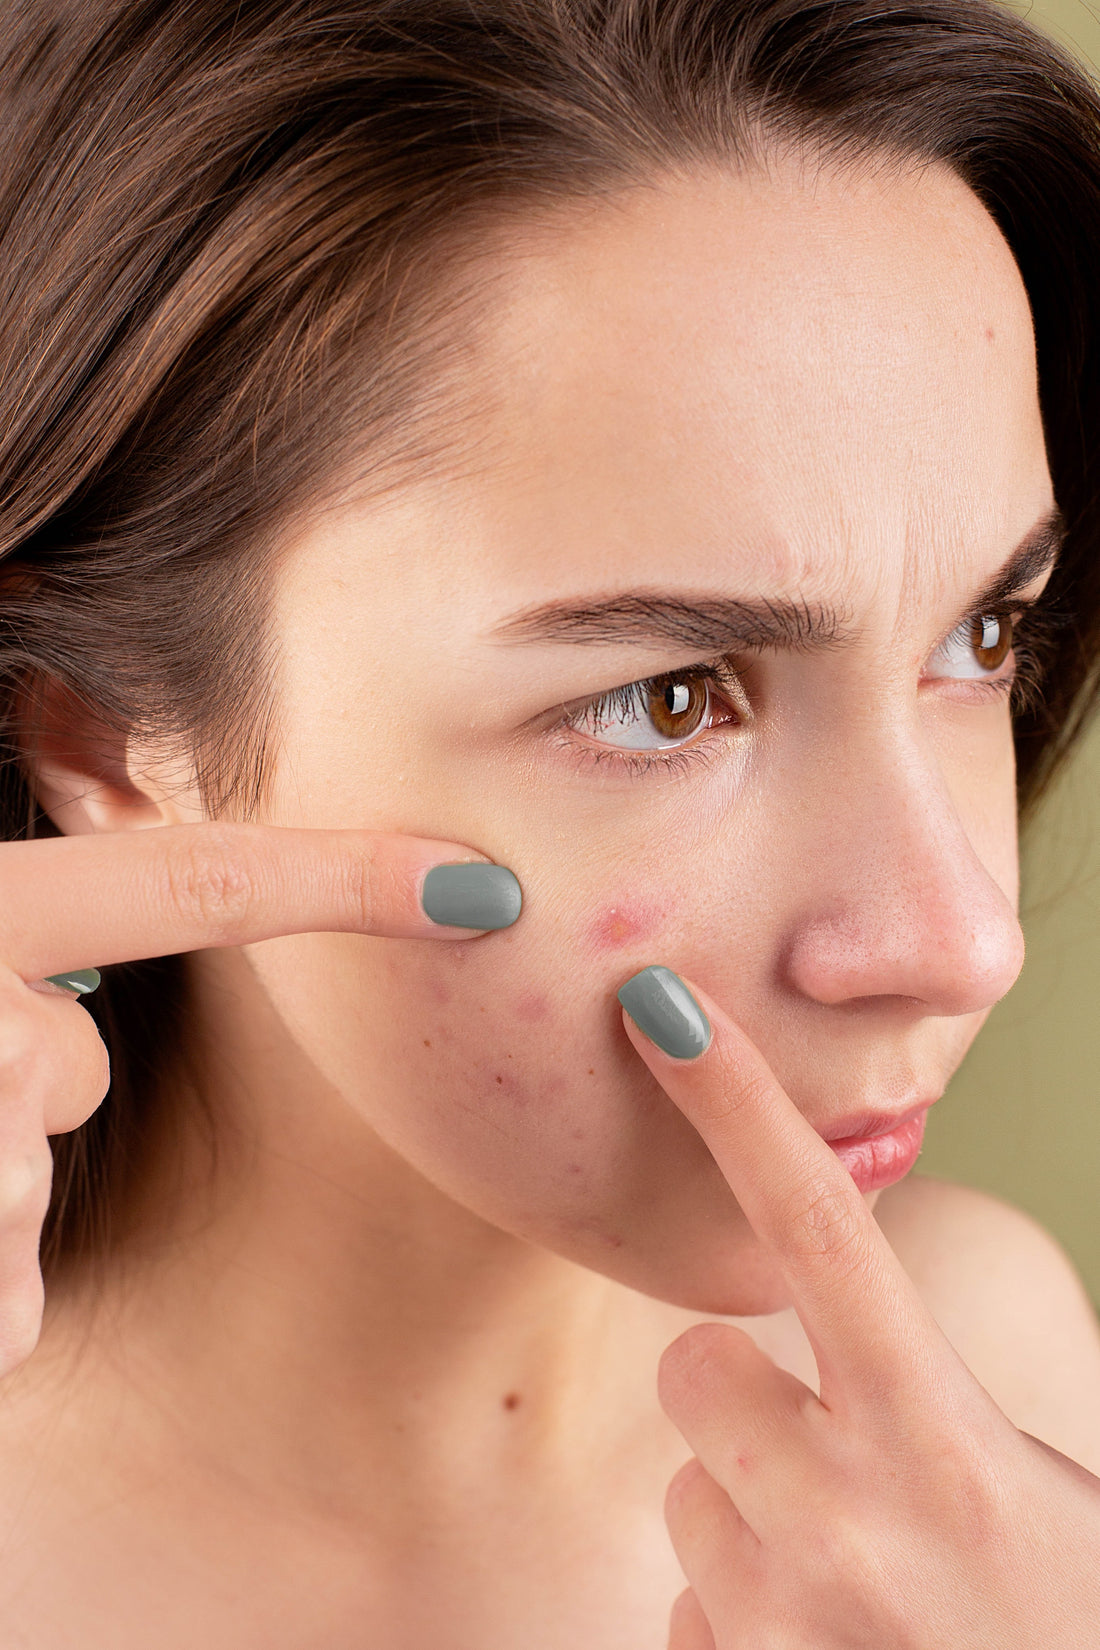 How to treat acne holistically